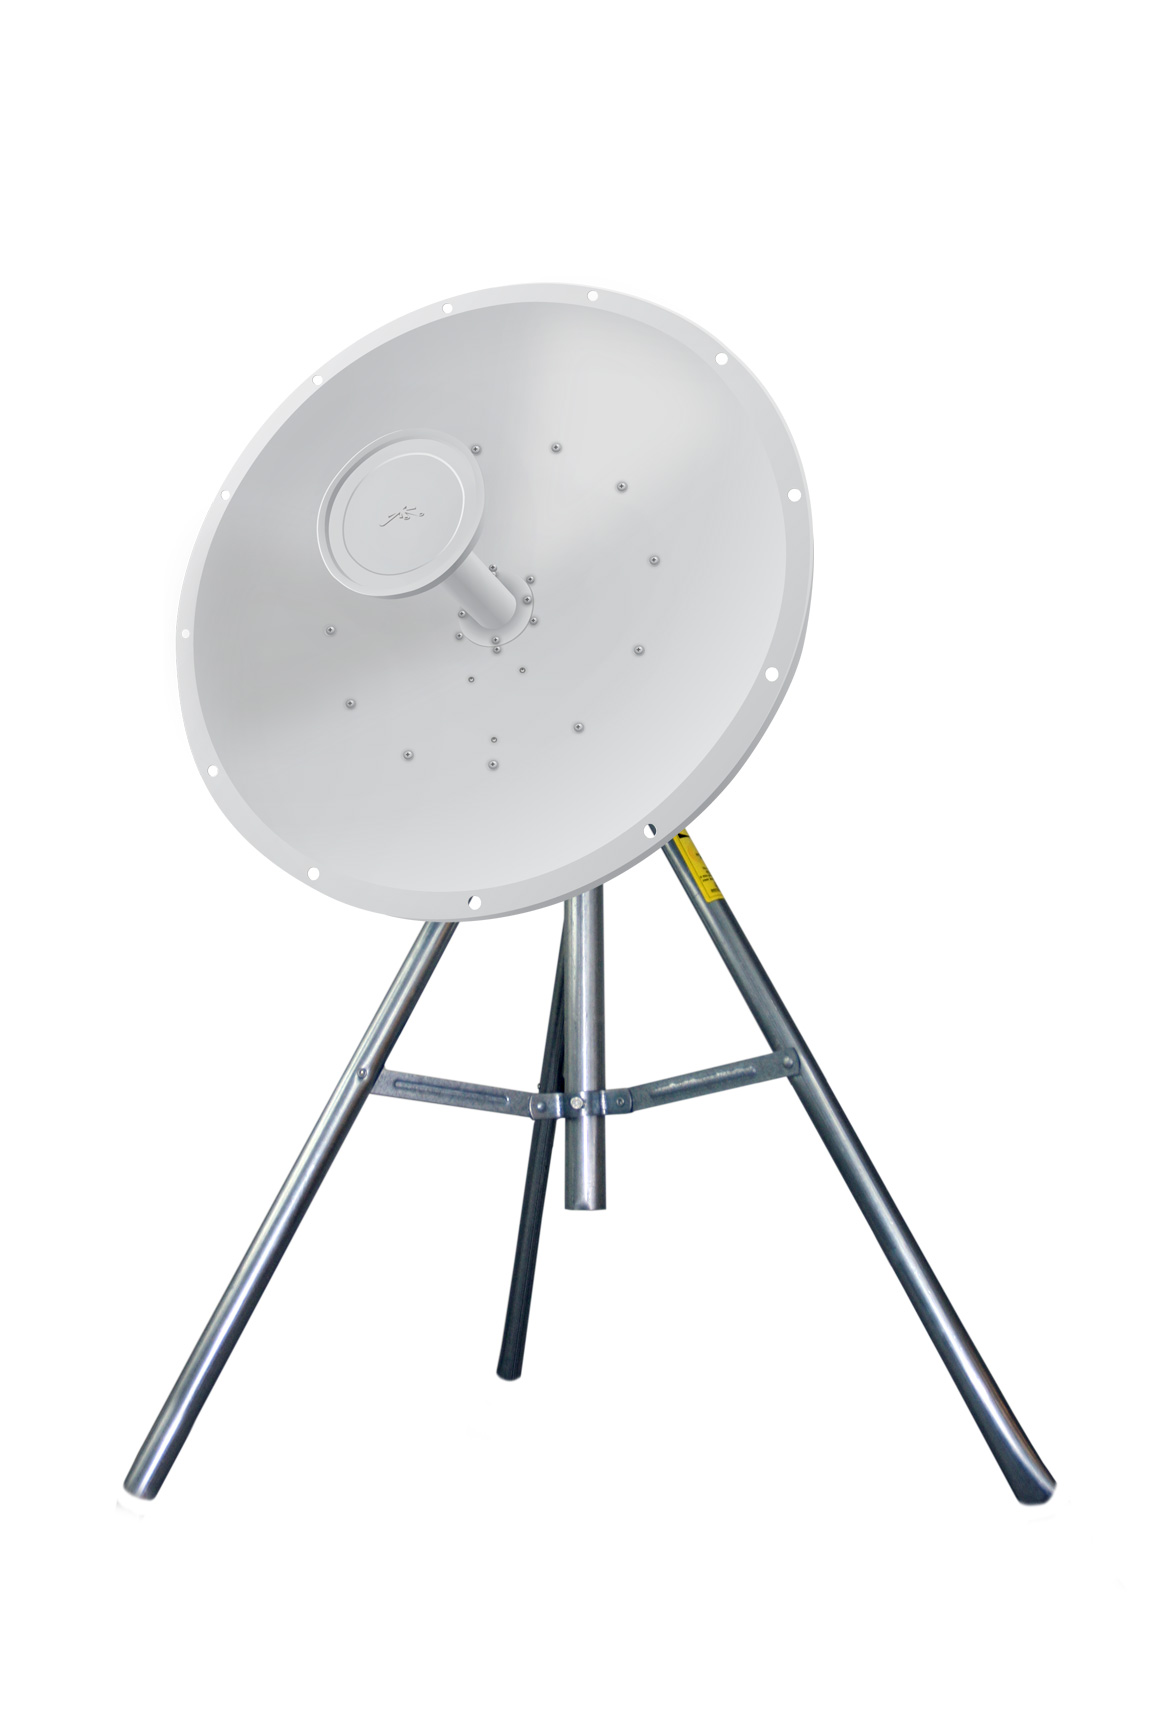 Antenna 5 GHz Airmax RocketDish 5G-30 Lisconet